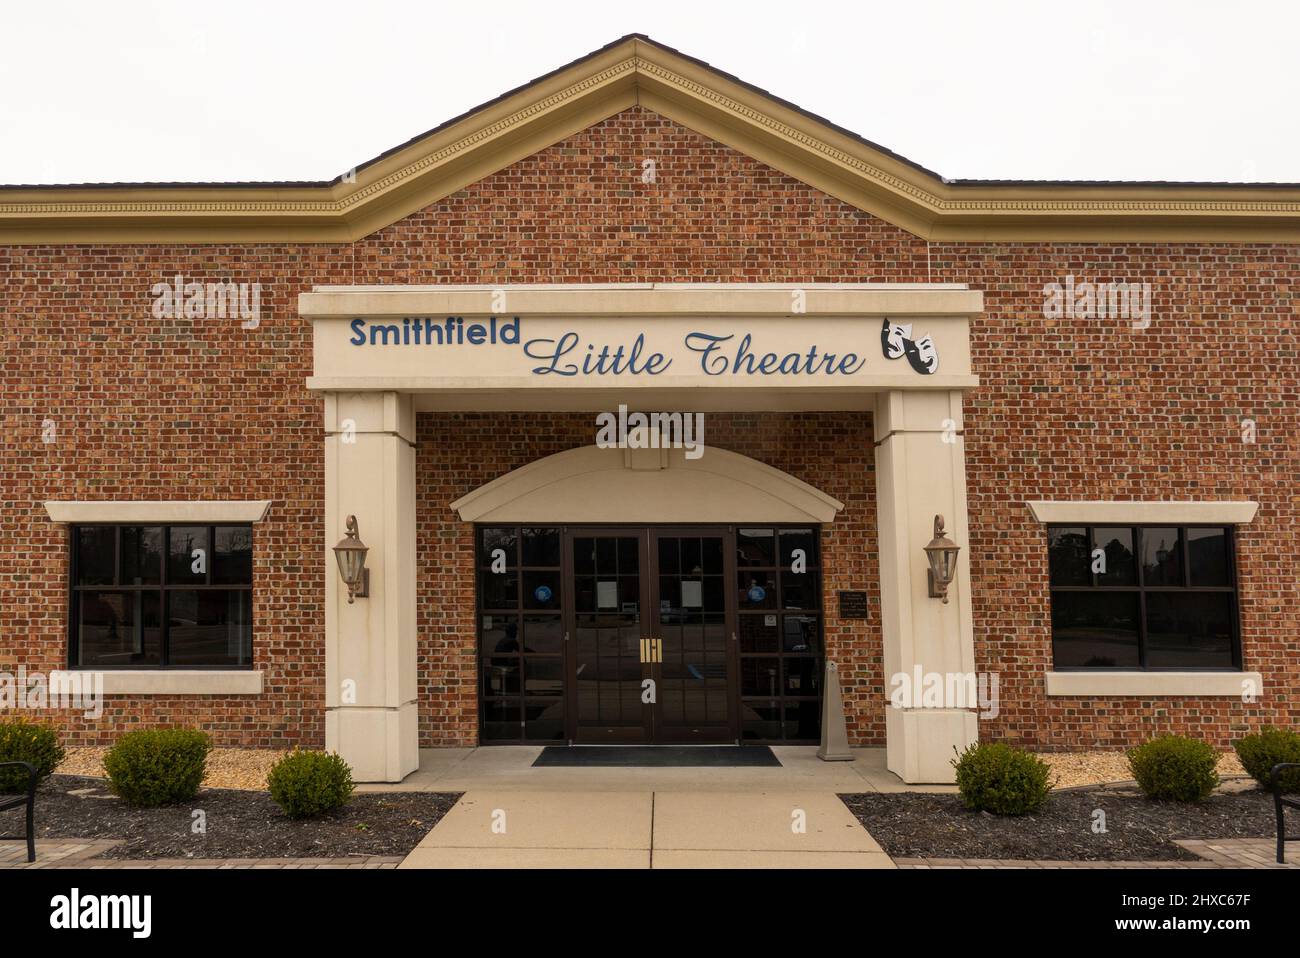 Smithfield Little Theatre company in Virginia Stock Photo